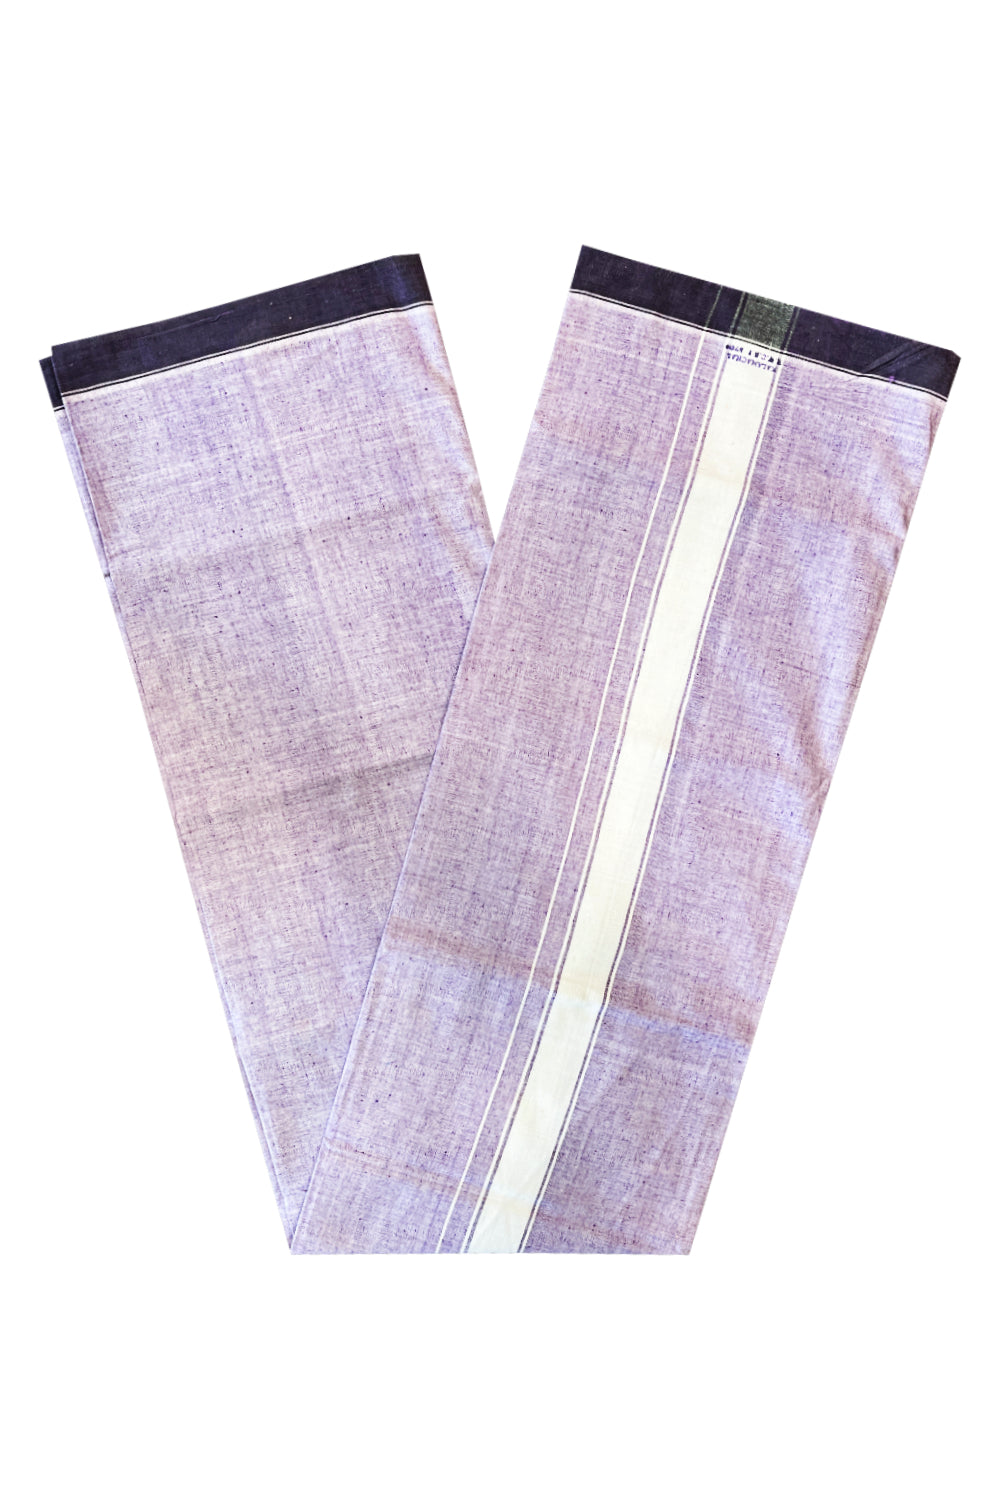 Southloom Premium Handloom Violet Solid Single Mundu (Lungi) with White Border (South Indian Kerala Dhoti)